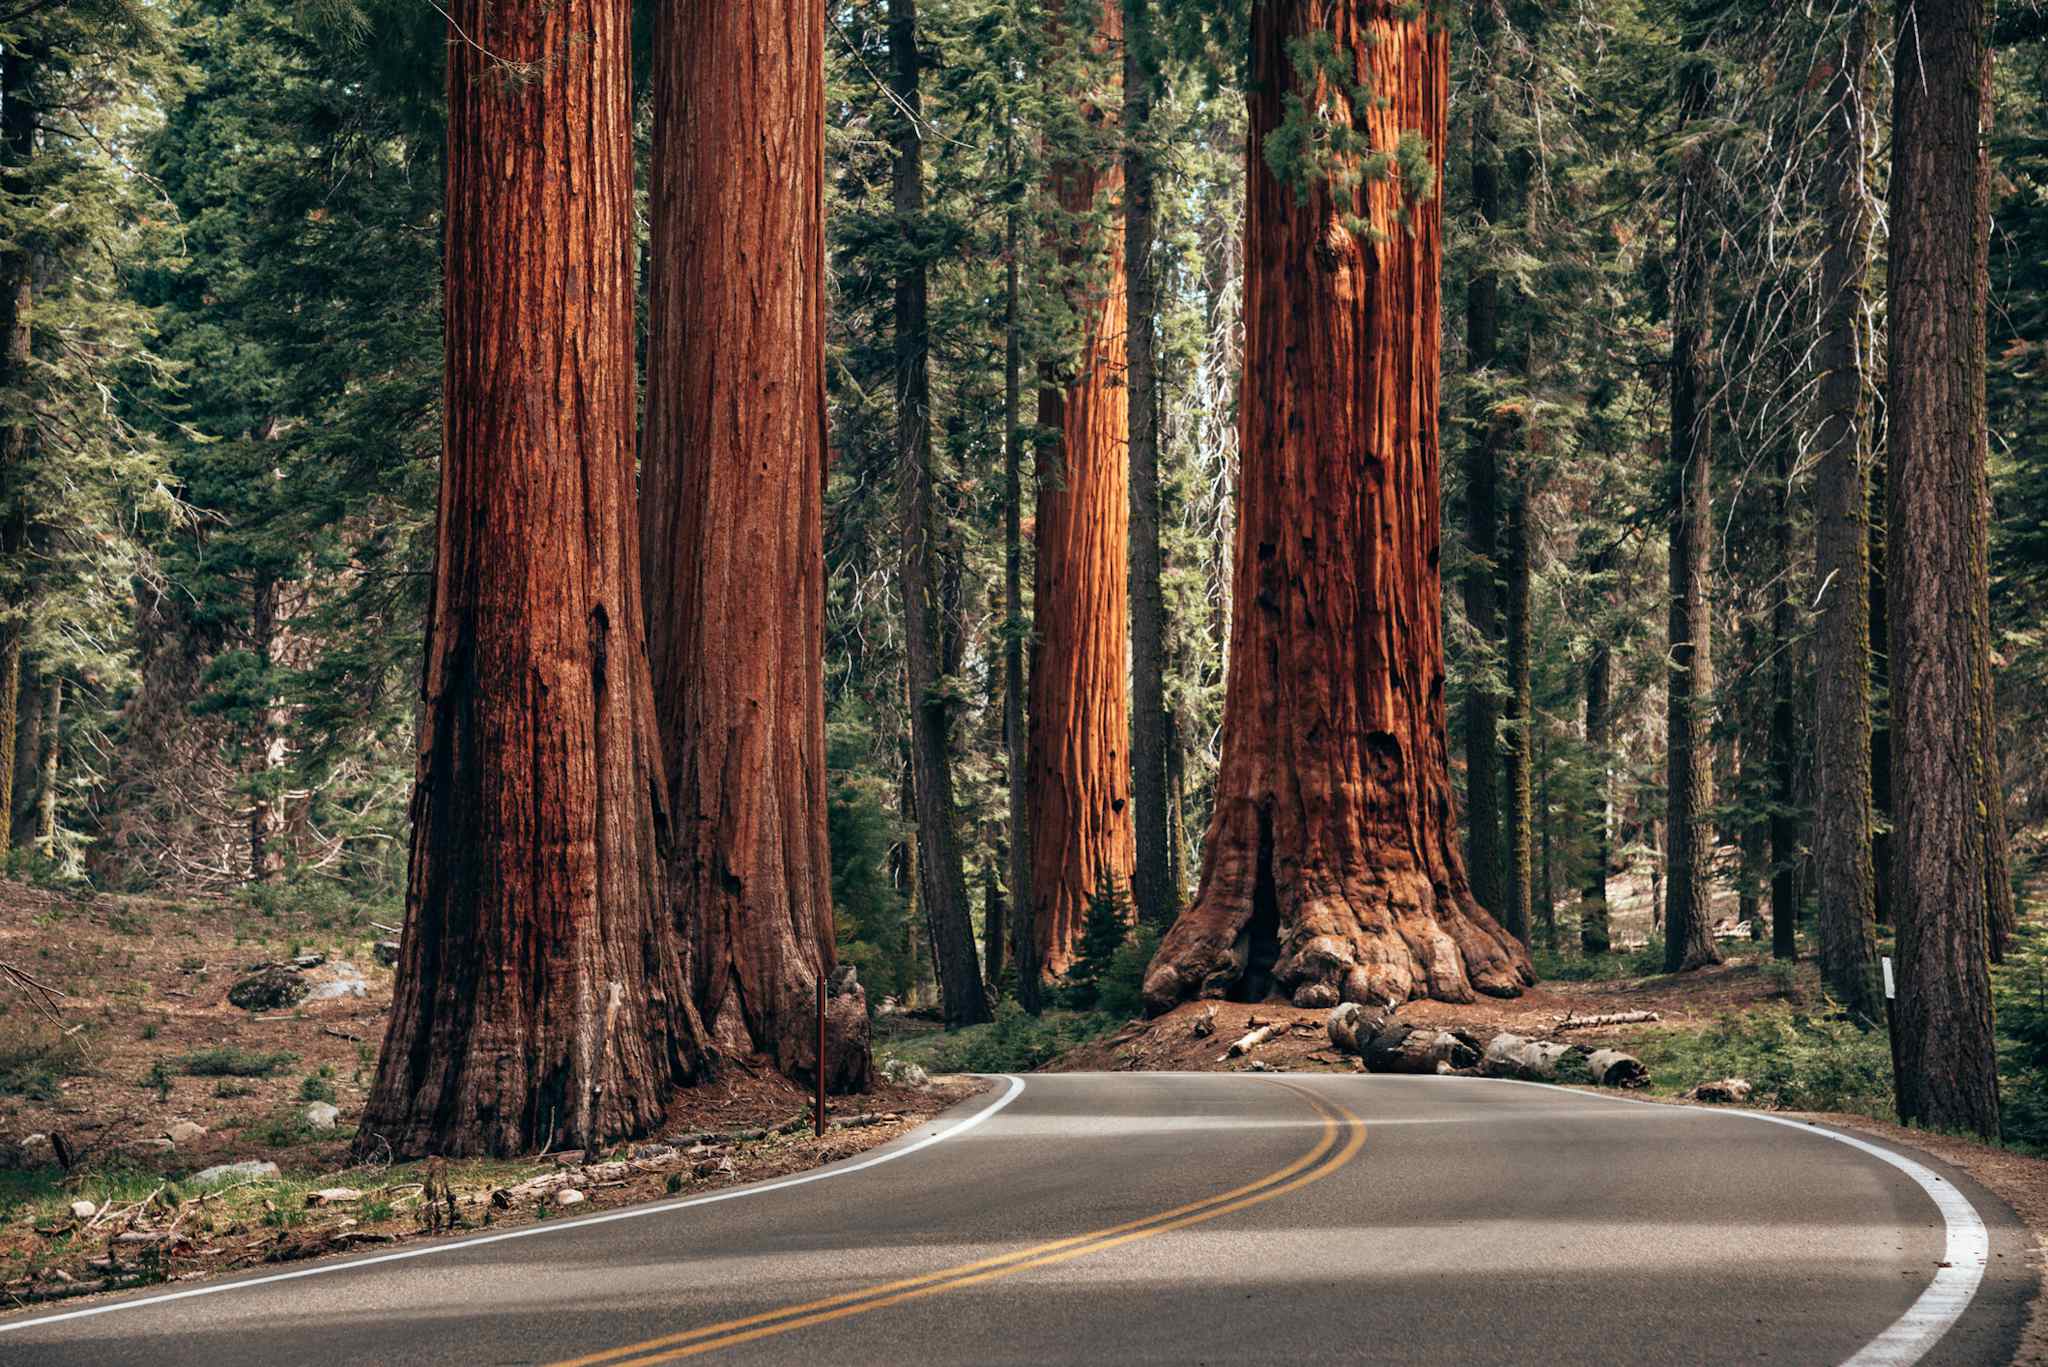 Sequoias National Park, USA
Getty: 1320271562
